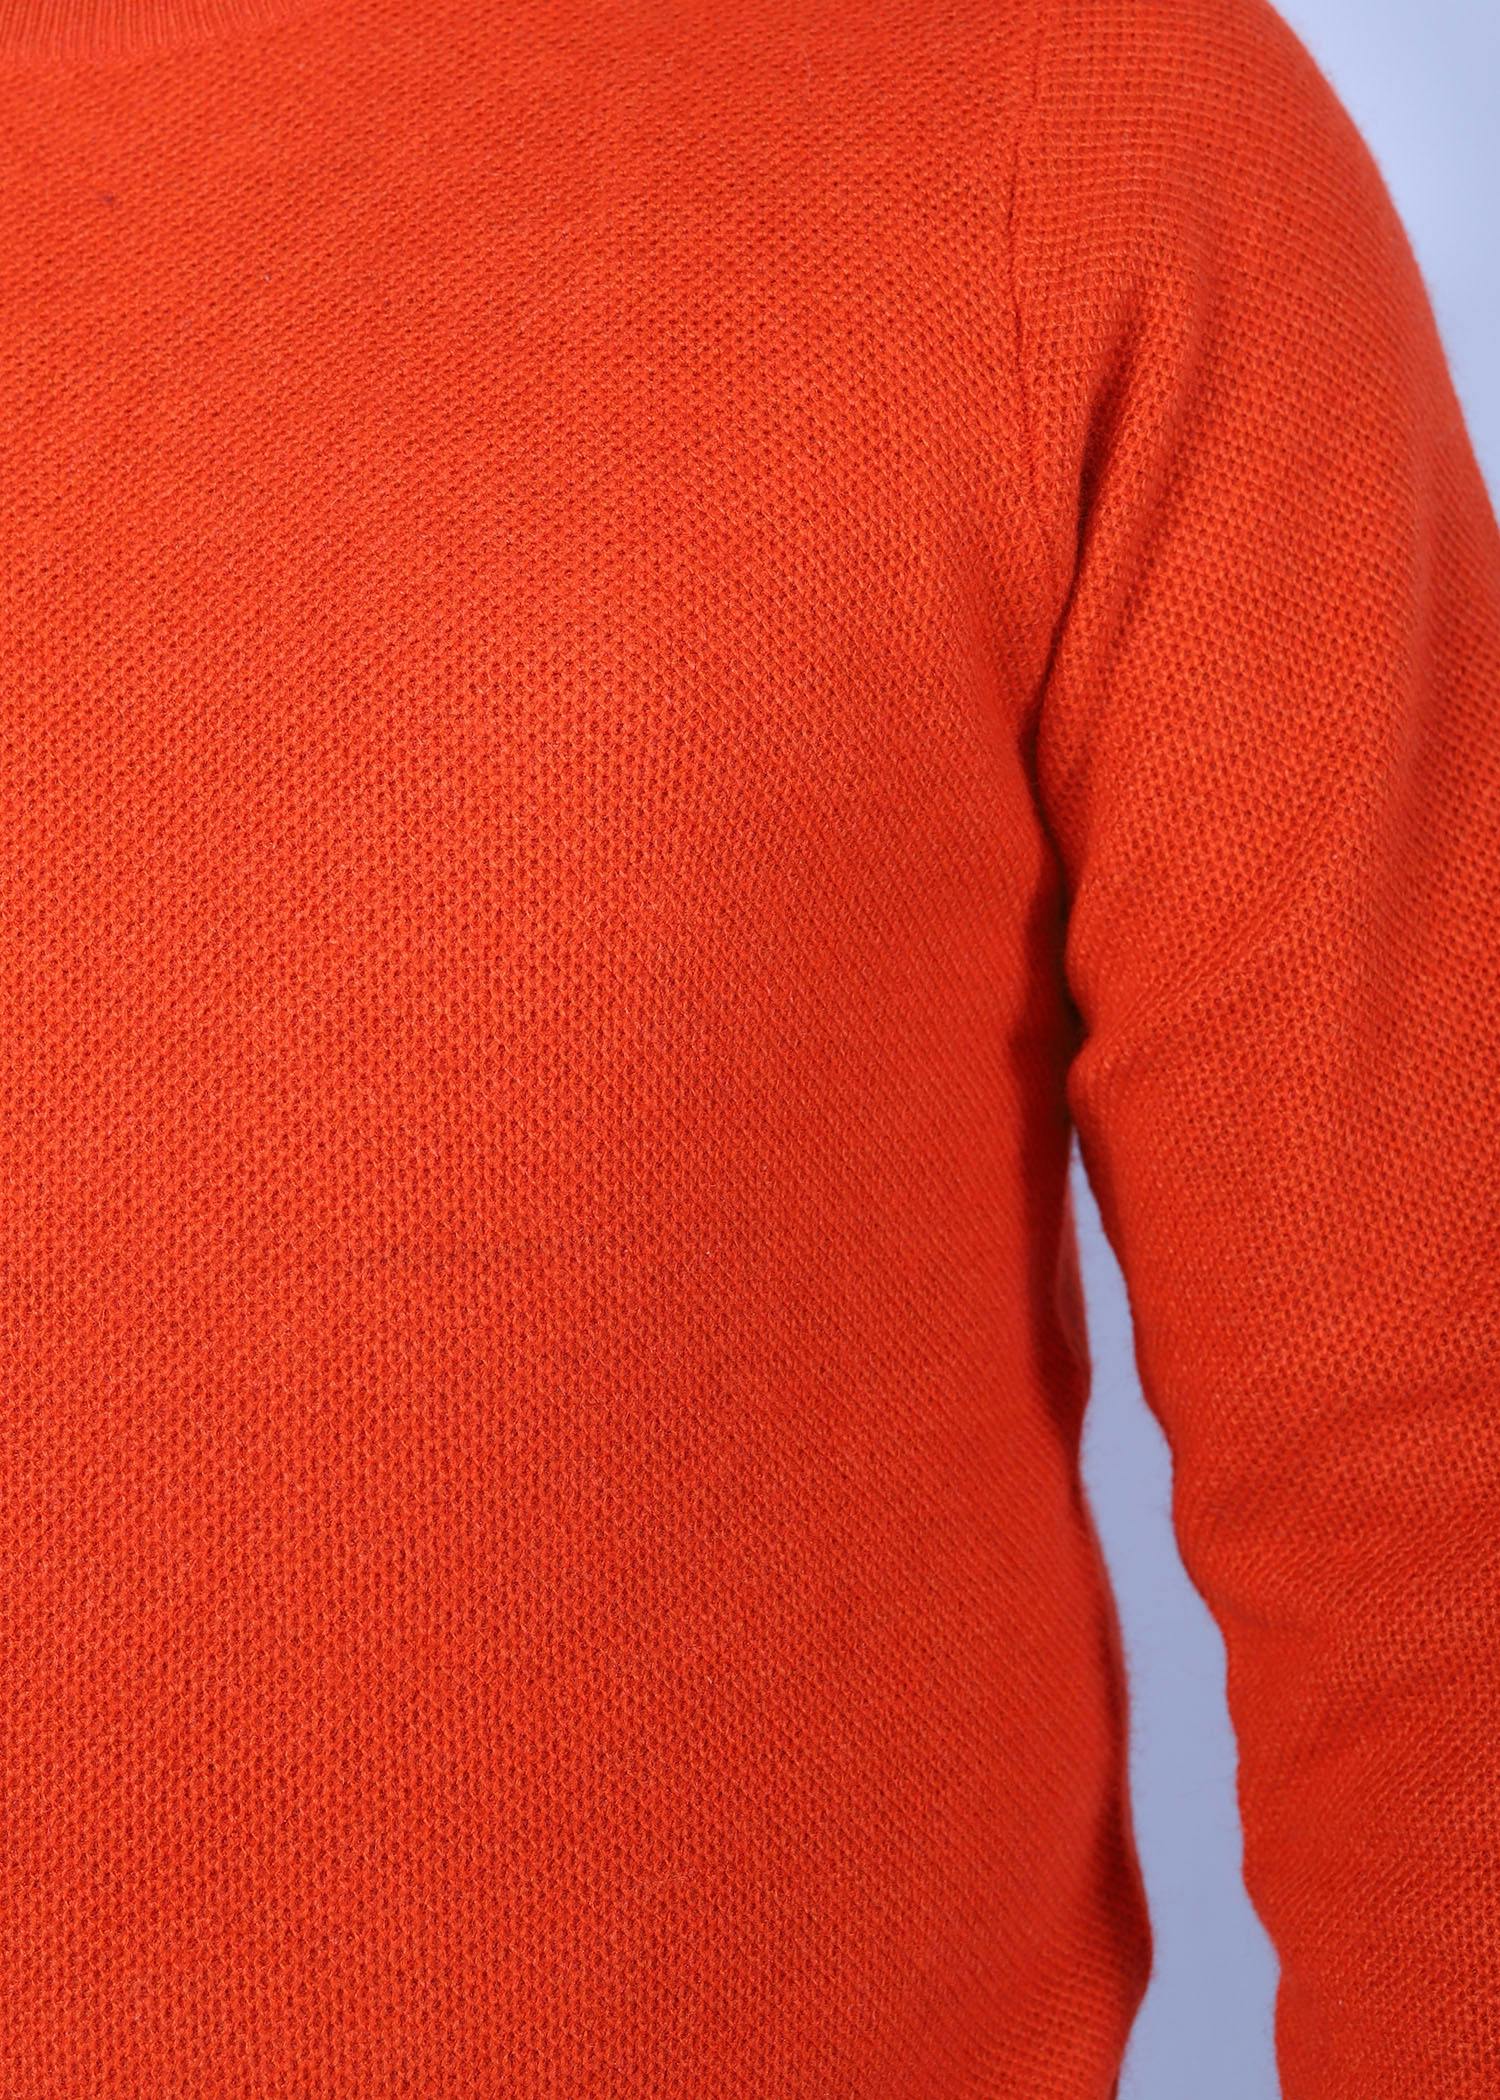 hillstar v sweater orange color close front view